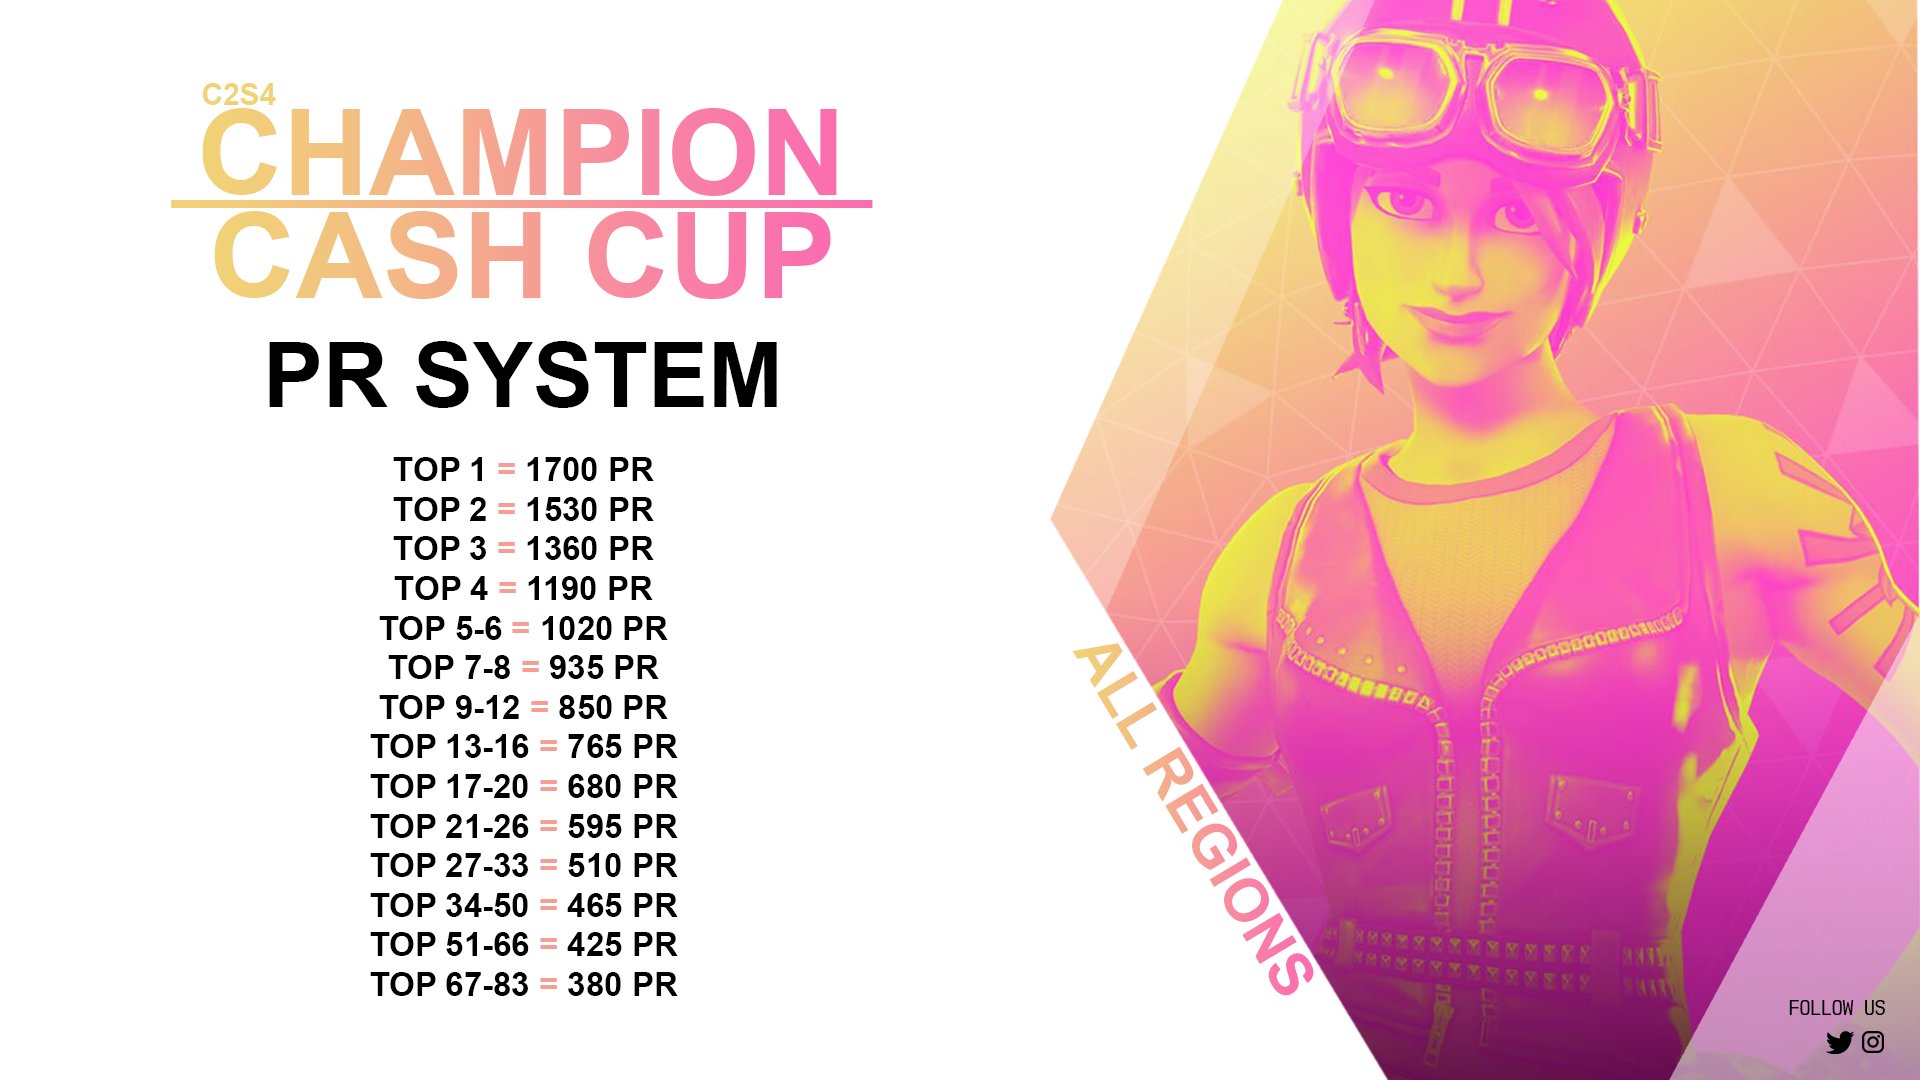 Fortnite on Twitter: Champion Cash Cup - System https://t.co/aoBb3PjW8w" Twitter